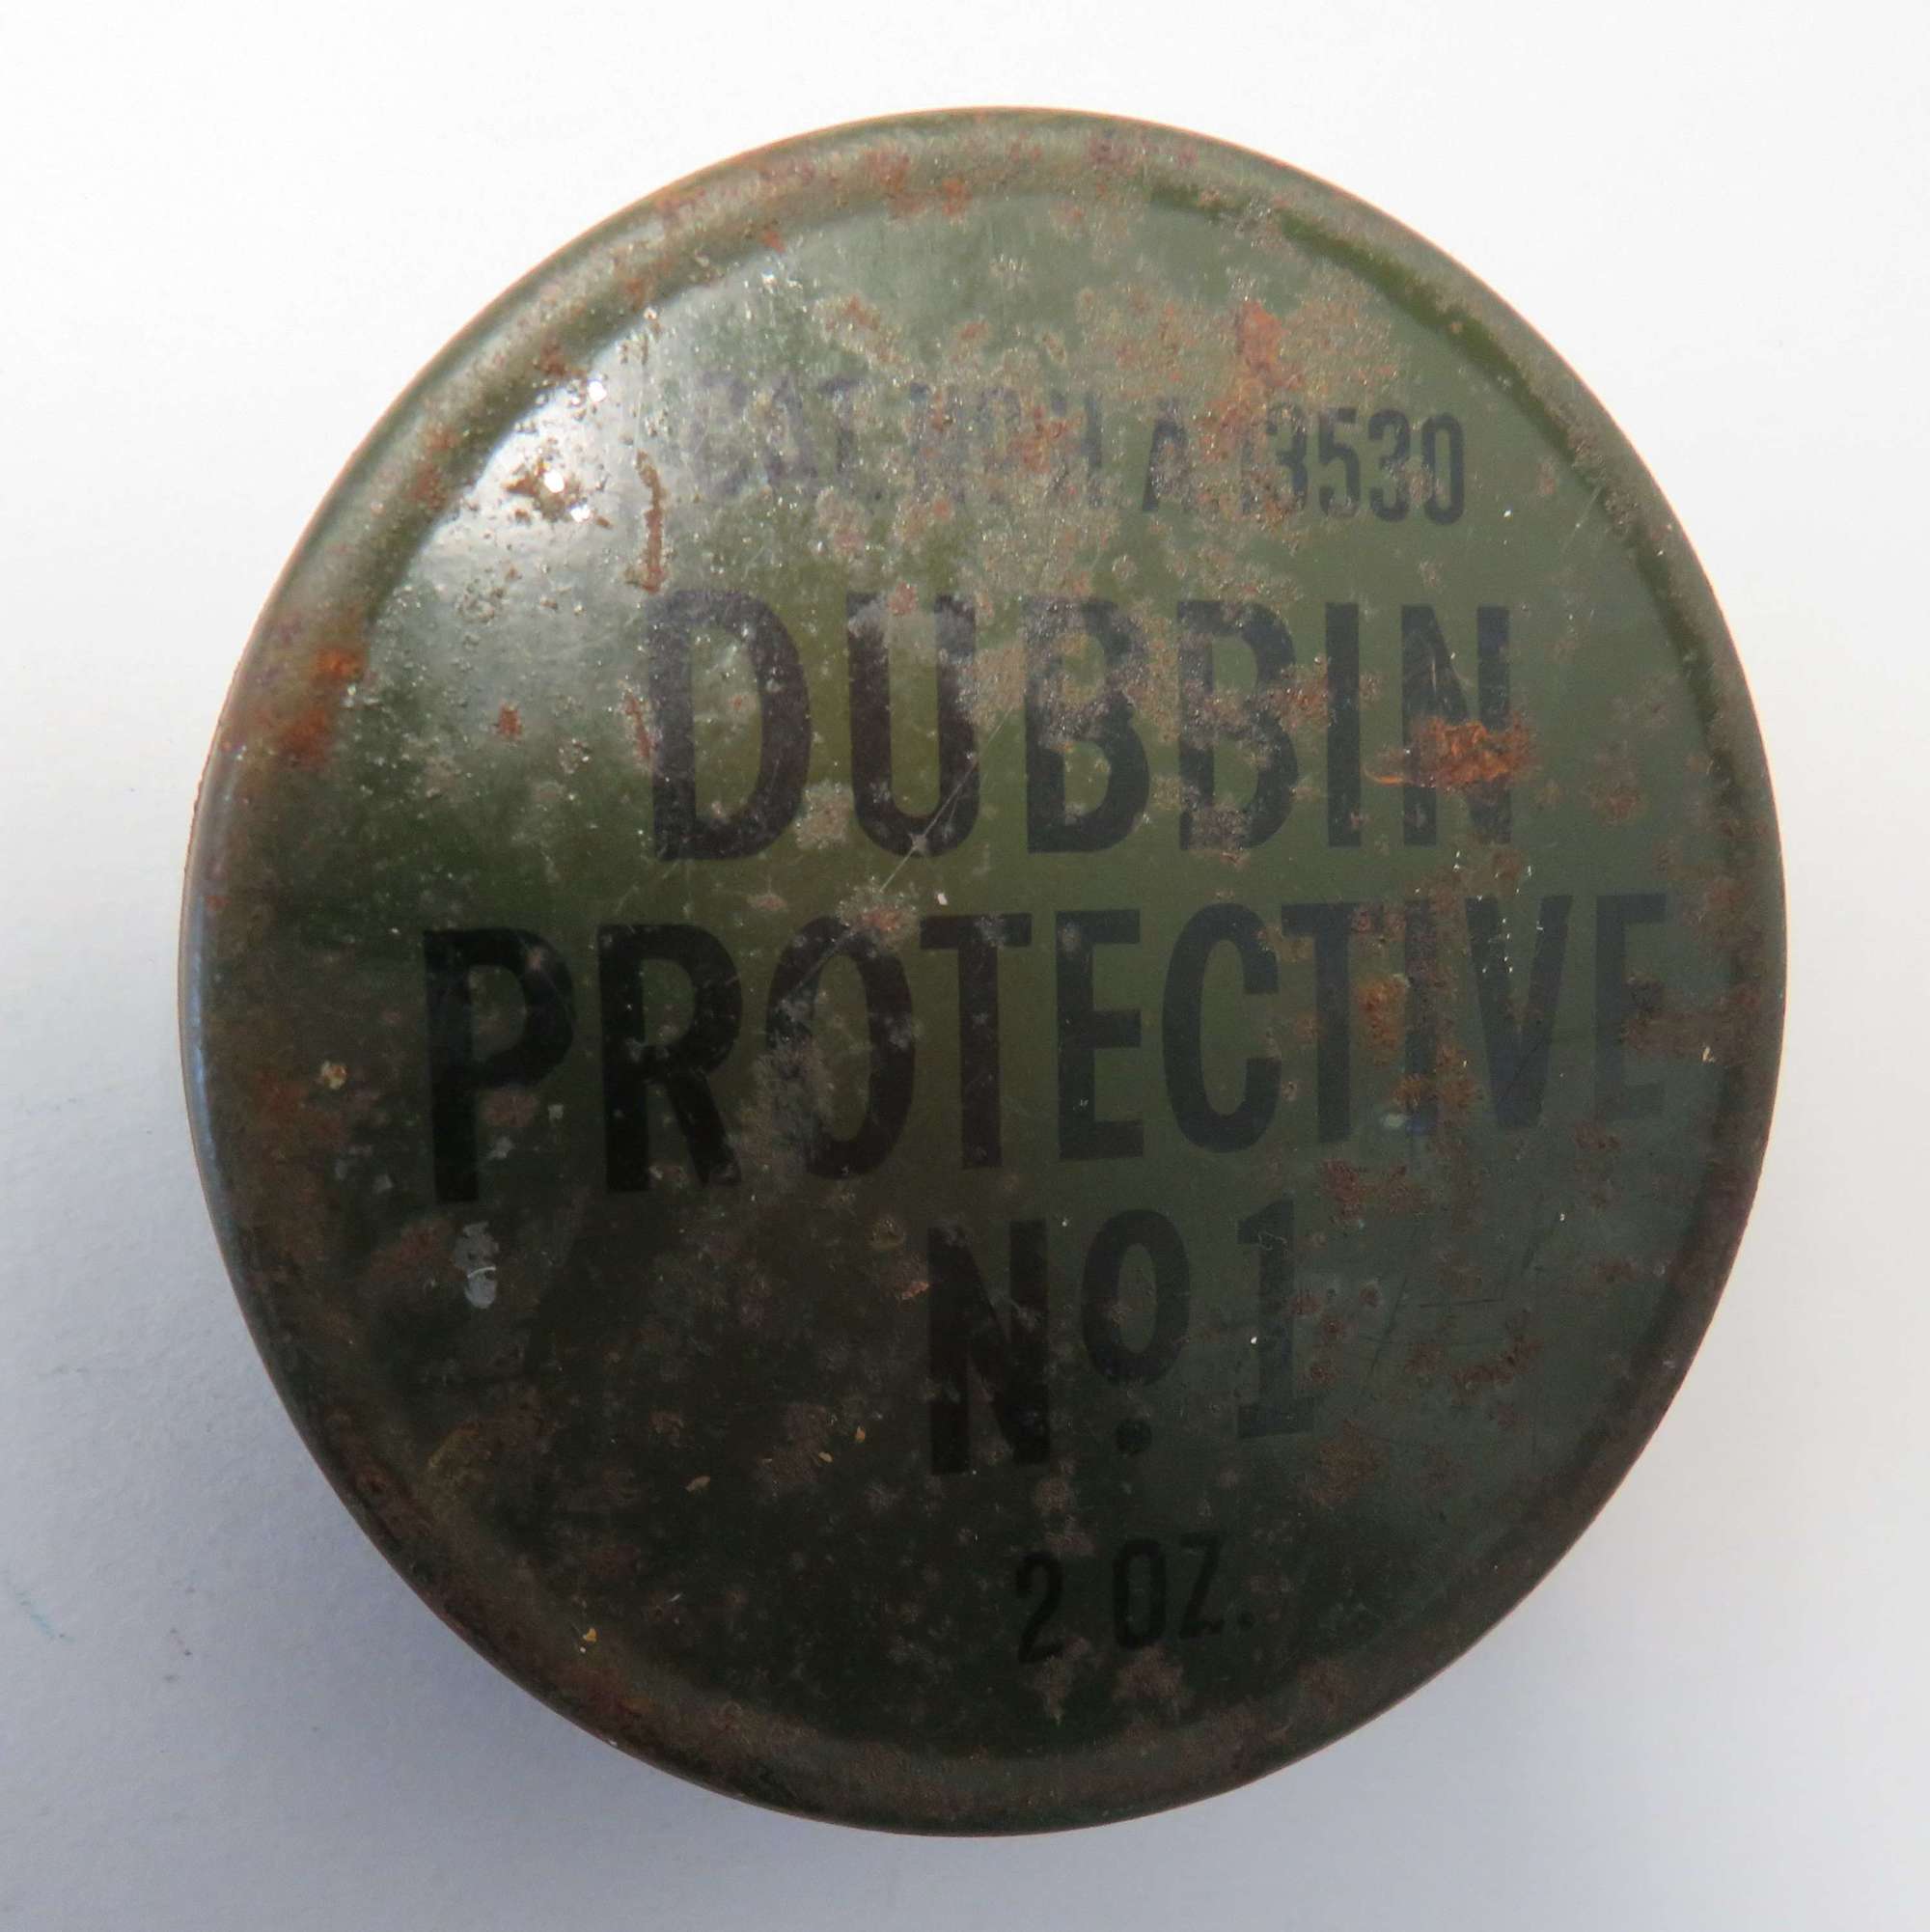 WW2 Unopened Tin of Dubbin No 1